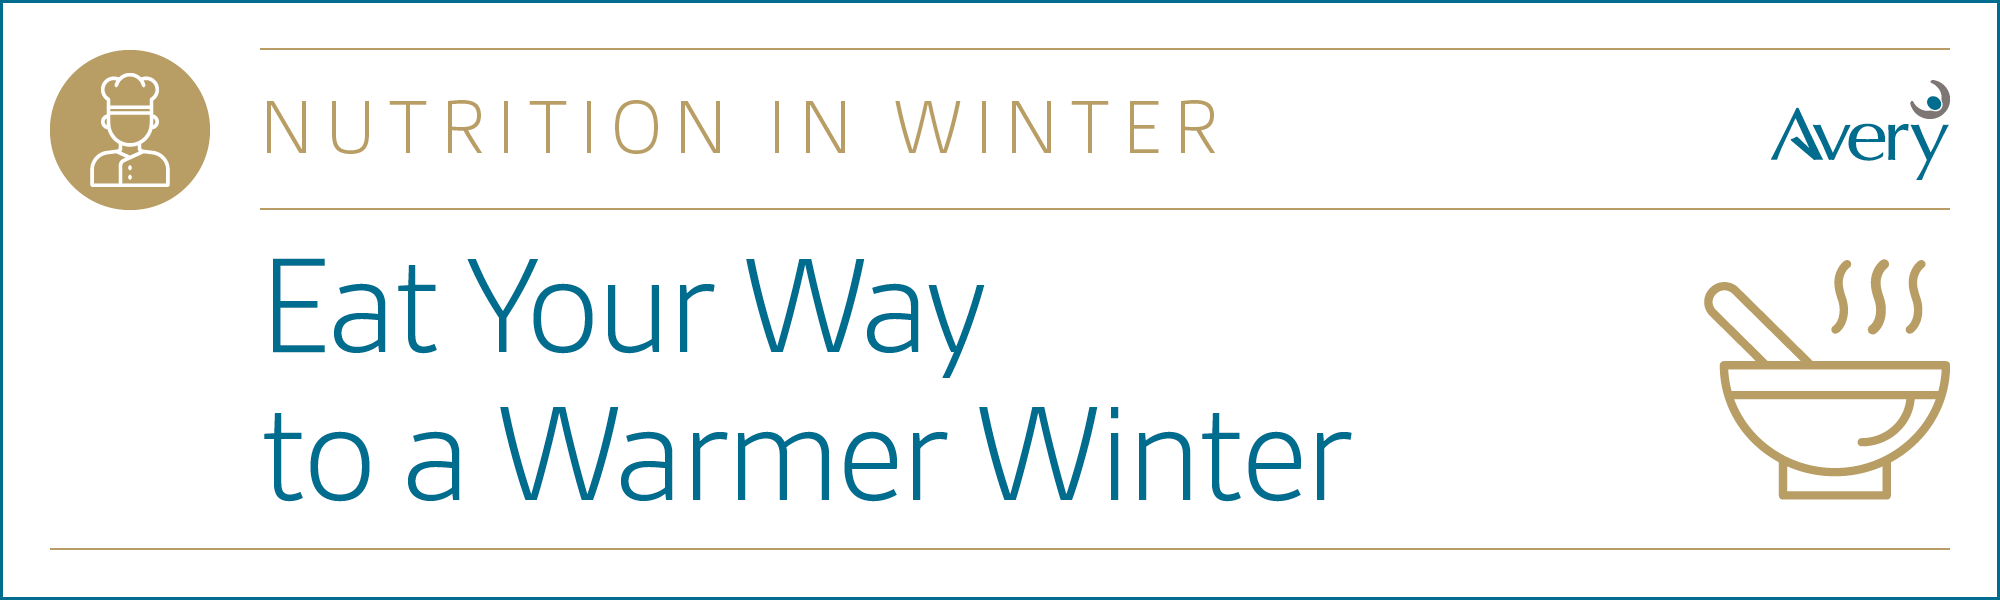 Nutrition in Winter Eat Way to Warmer Winter Banner